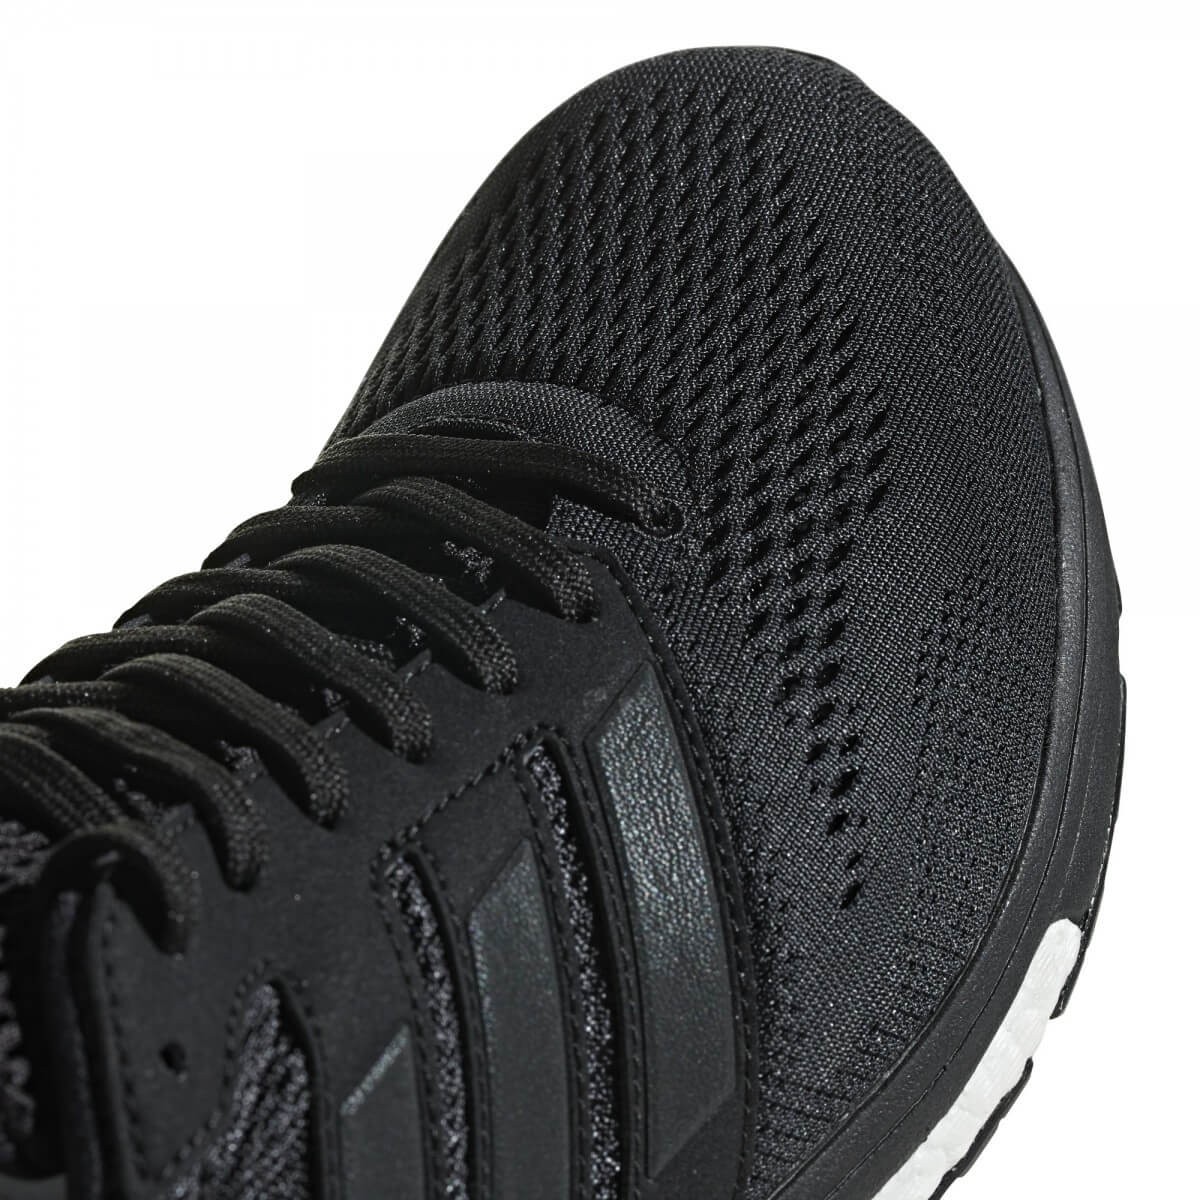 Adidas Adizero Boston 7 Black Carbon Mens